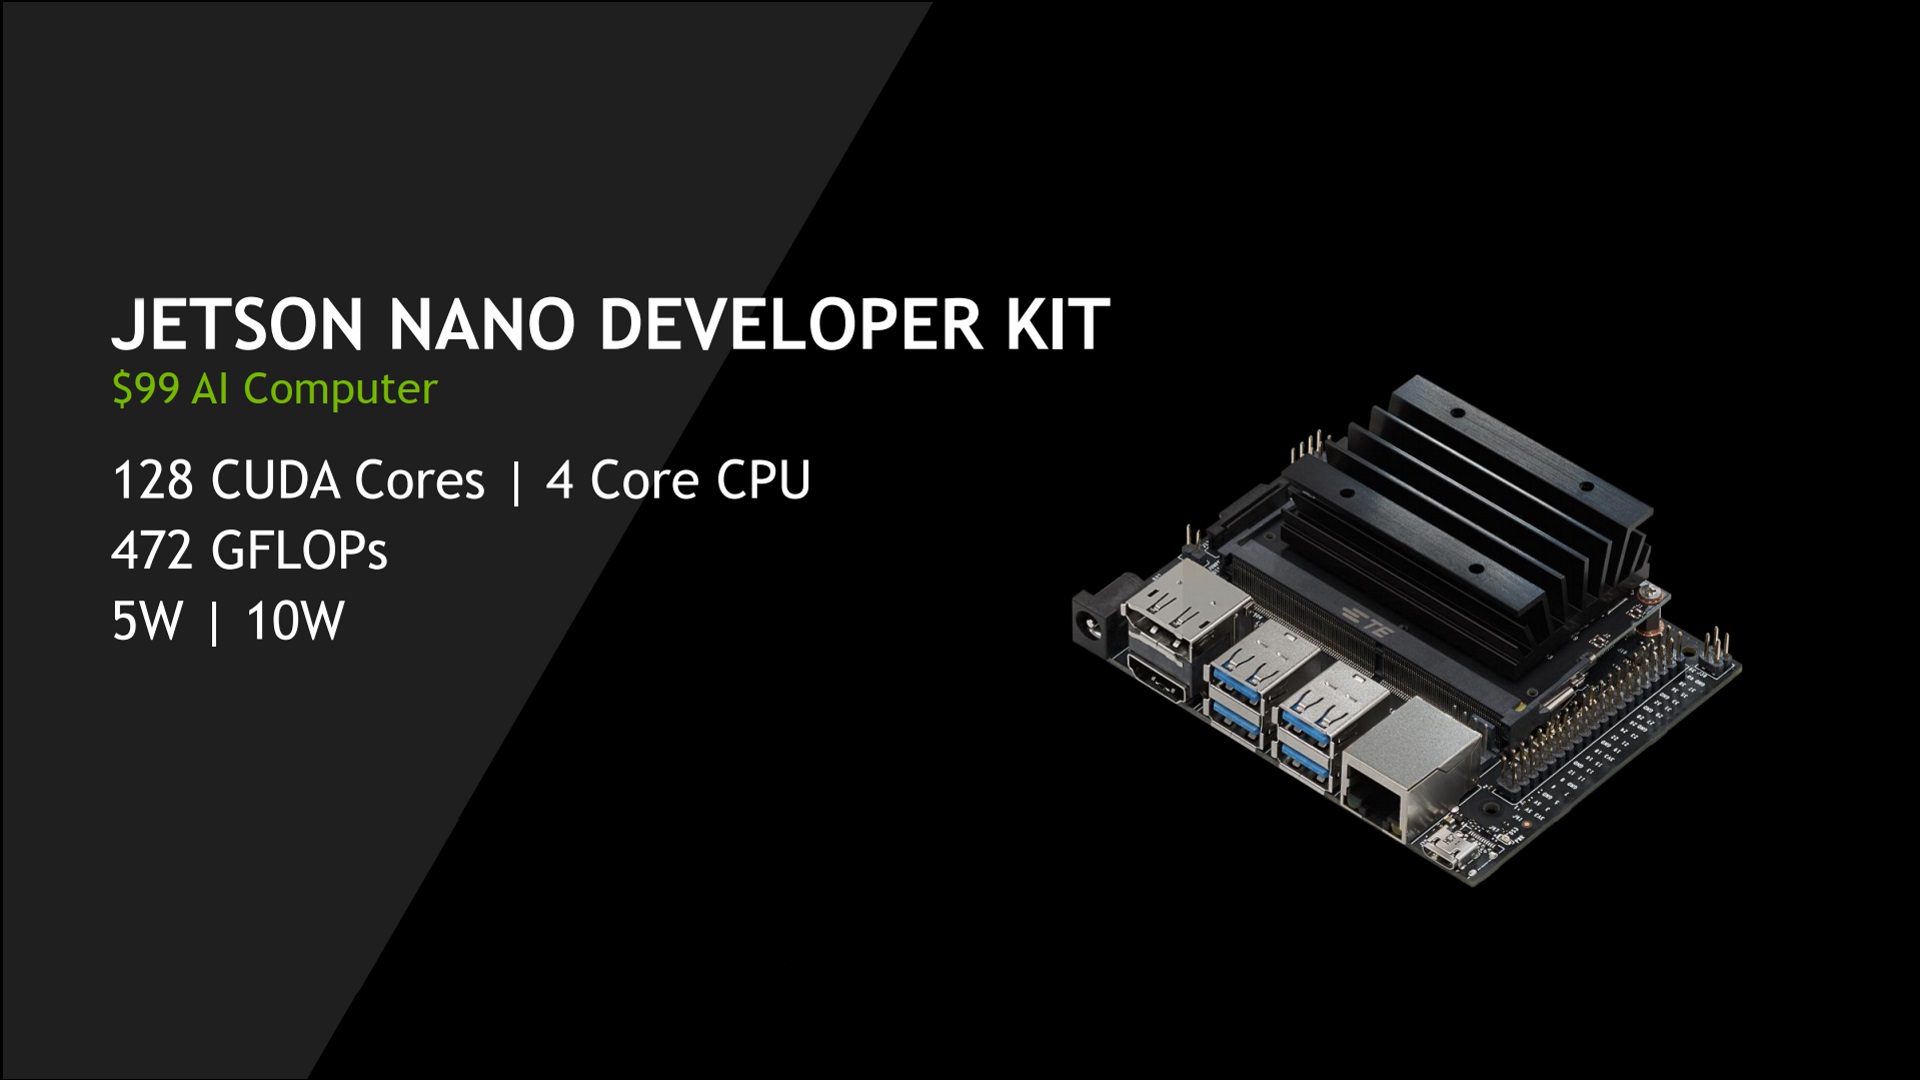 Promo photo of the new Nvidia Jetson Nano alongside the specs and price info.